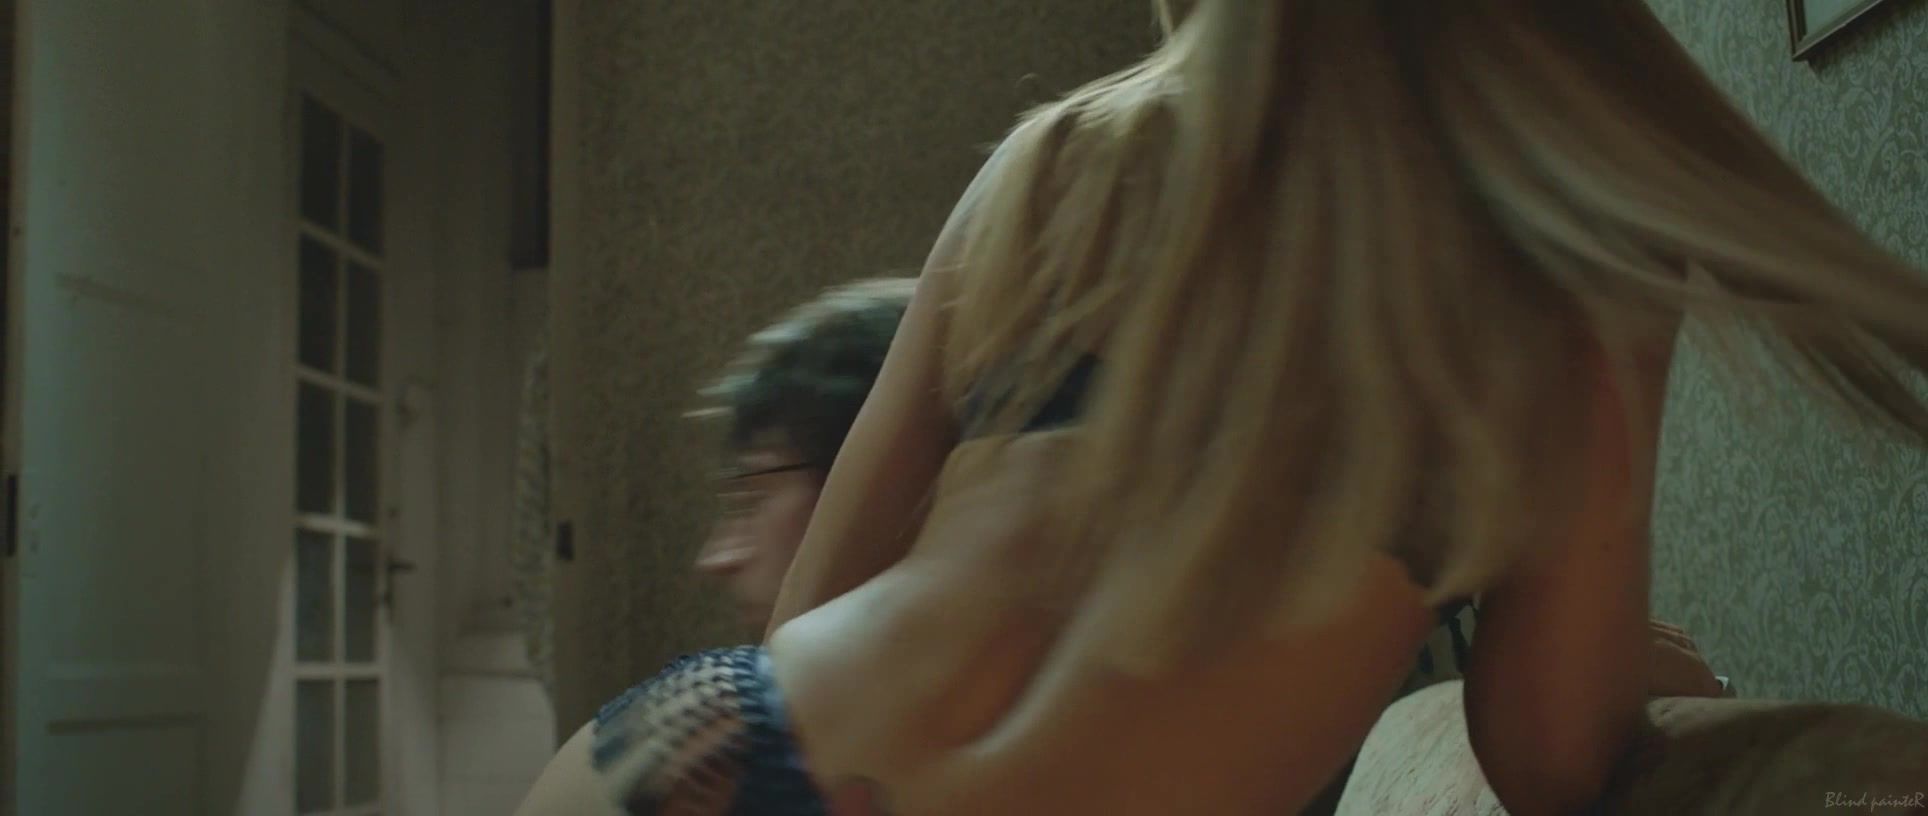 Anal Licking Sex video Sabrina Sato nude - O Concurso (2013) Tight Cunt - 2